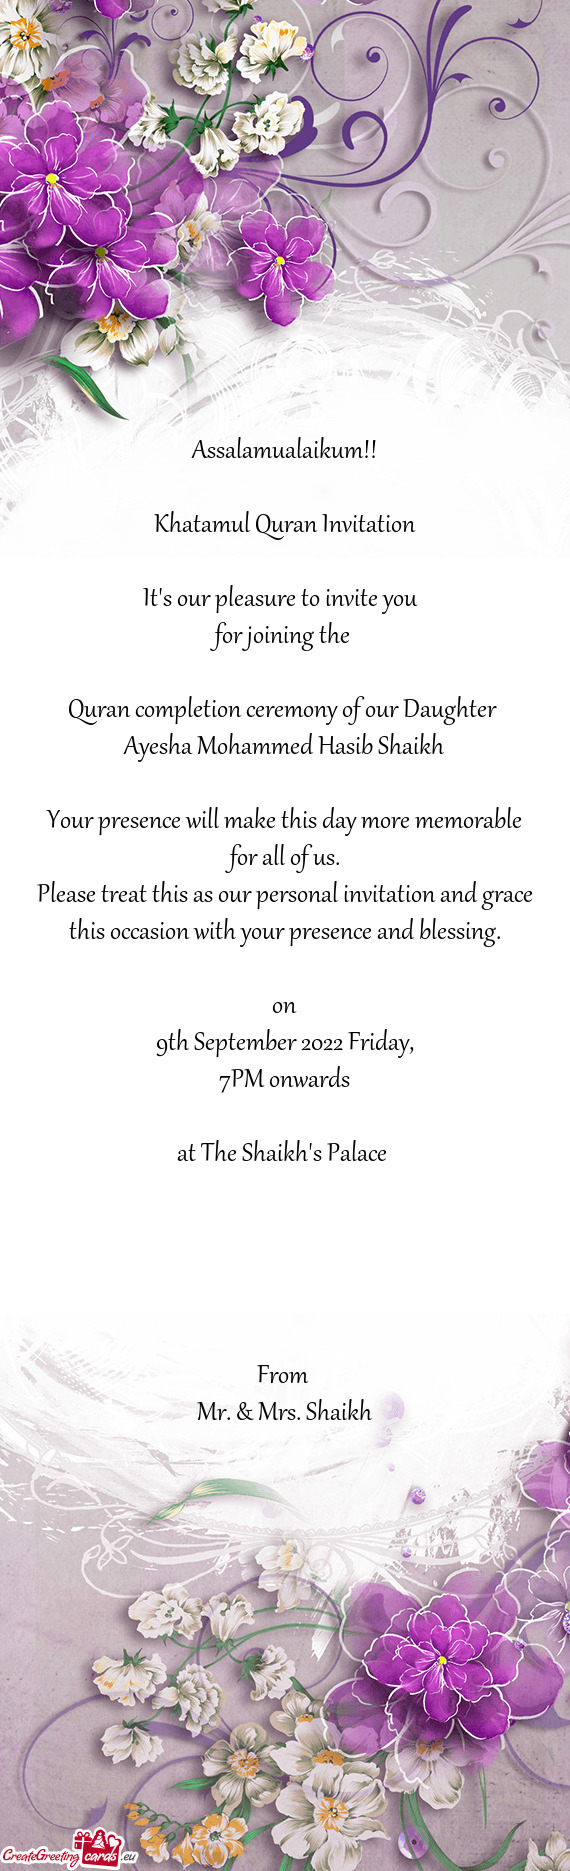 Khatamul Quran Invitation